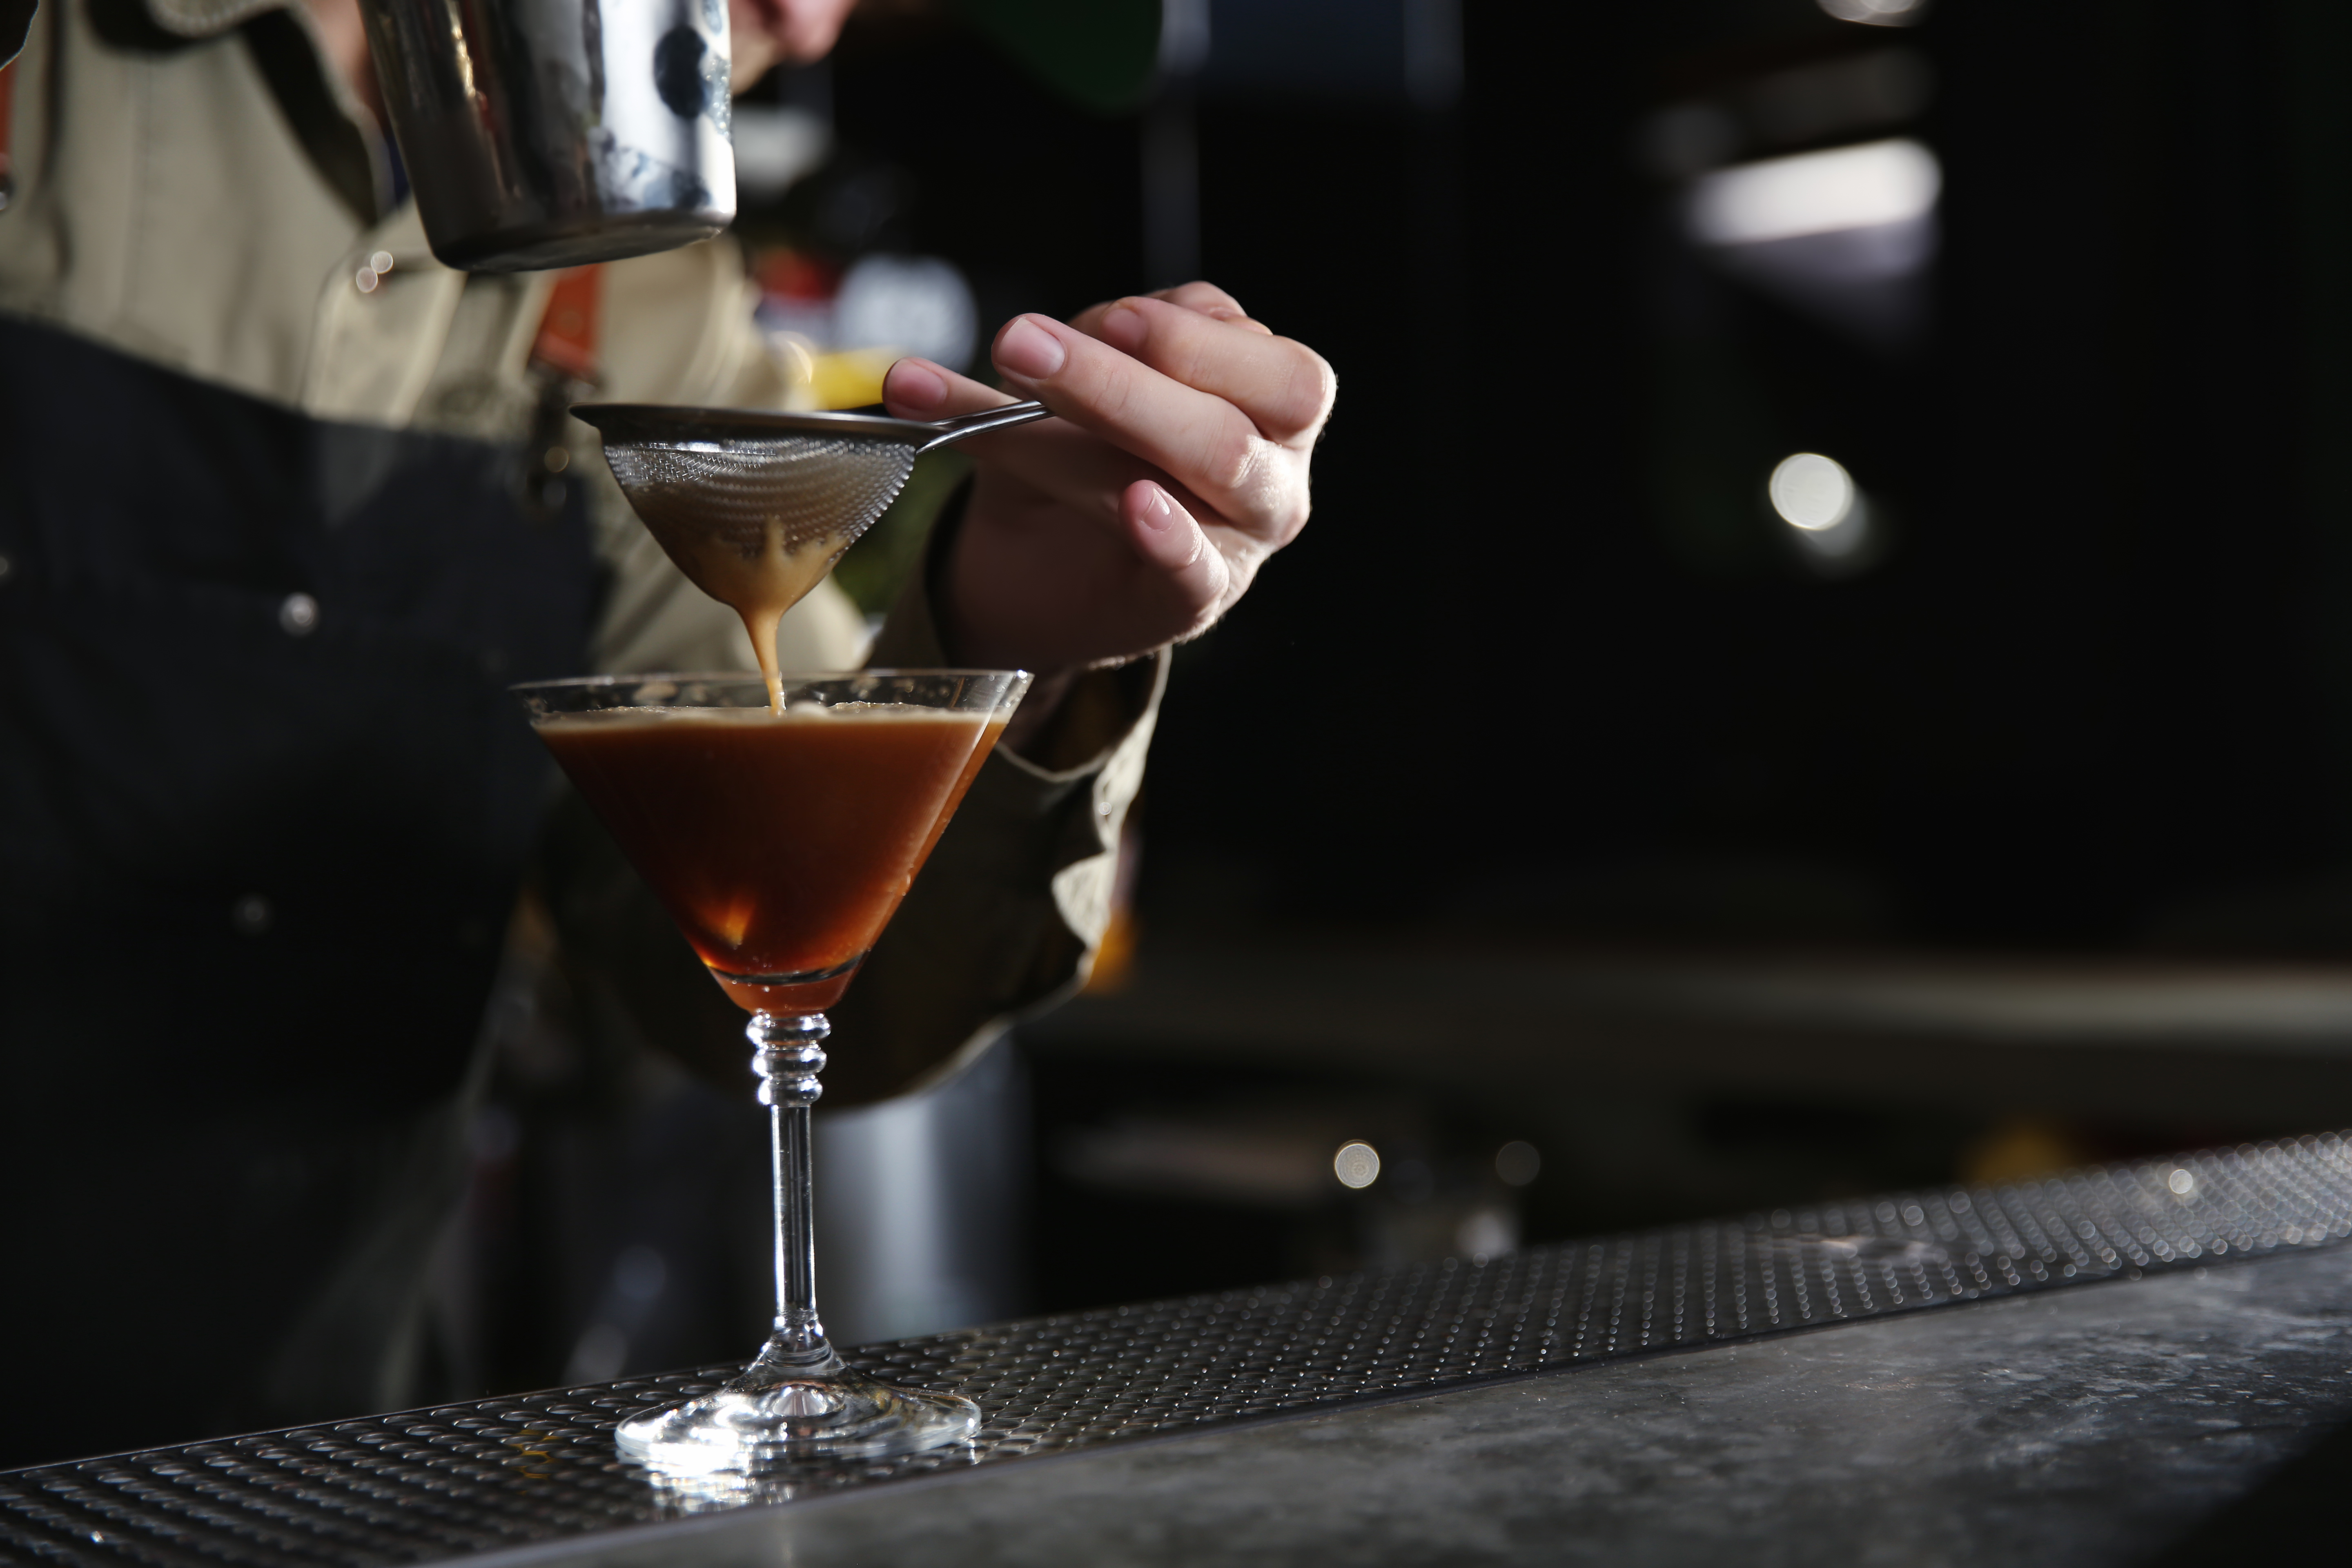 A bartender makes an espresso martini using a sieve at a bar.